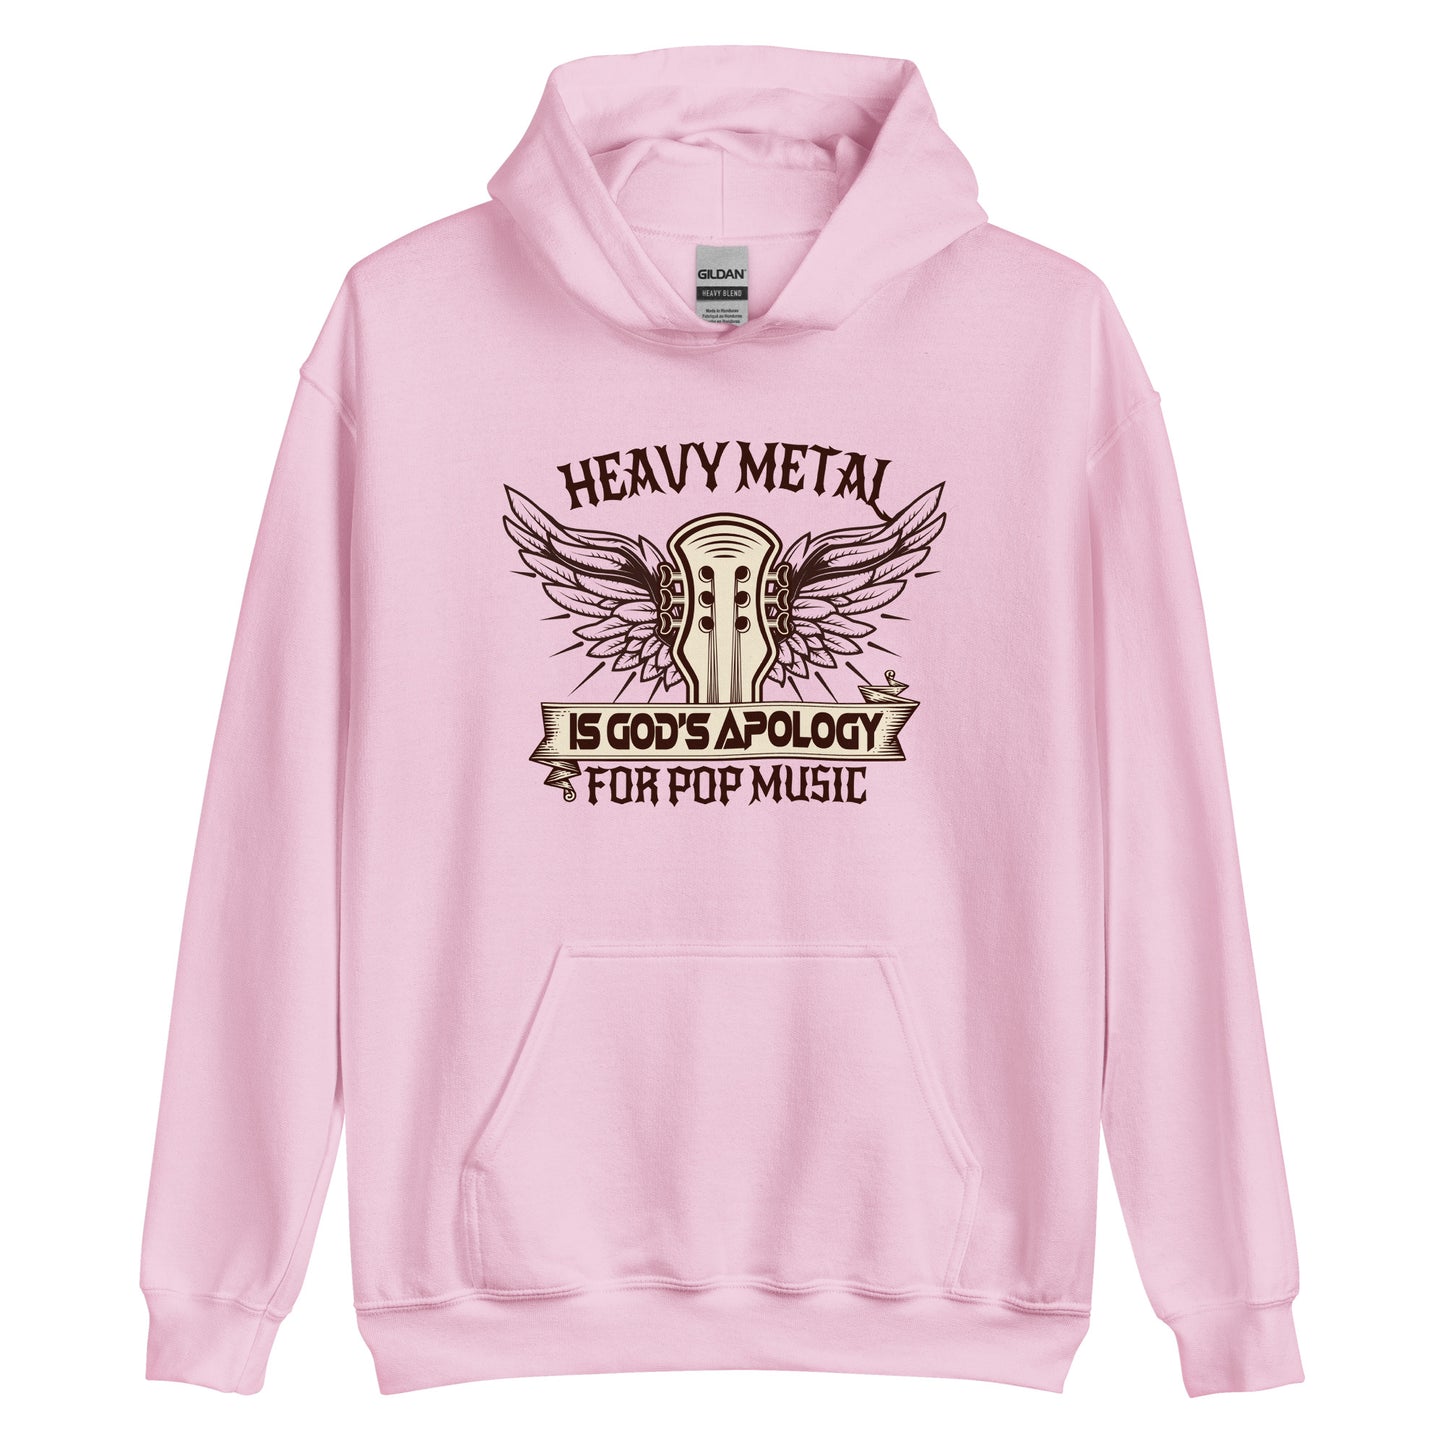 Heavy Metal Is God's Apology Hoodie pink